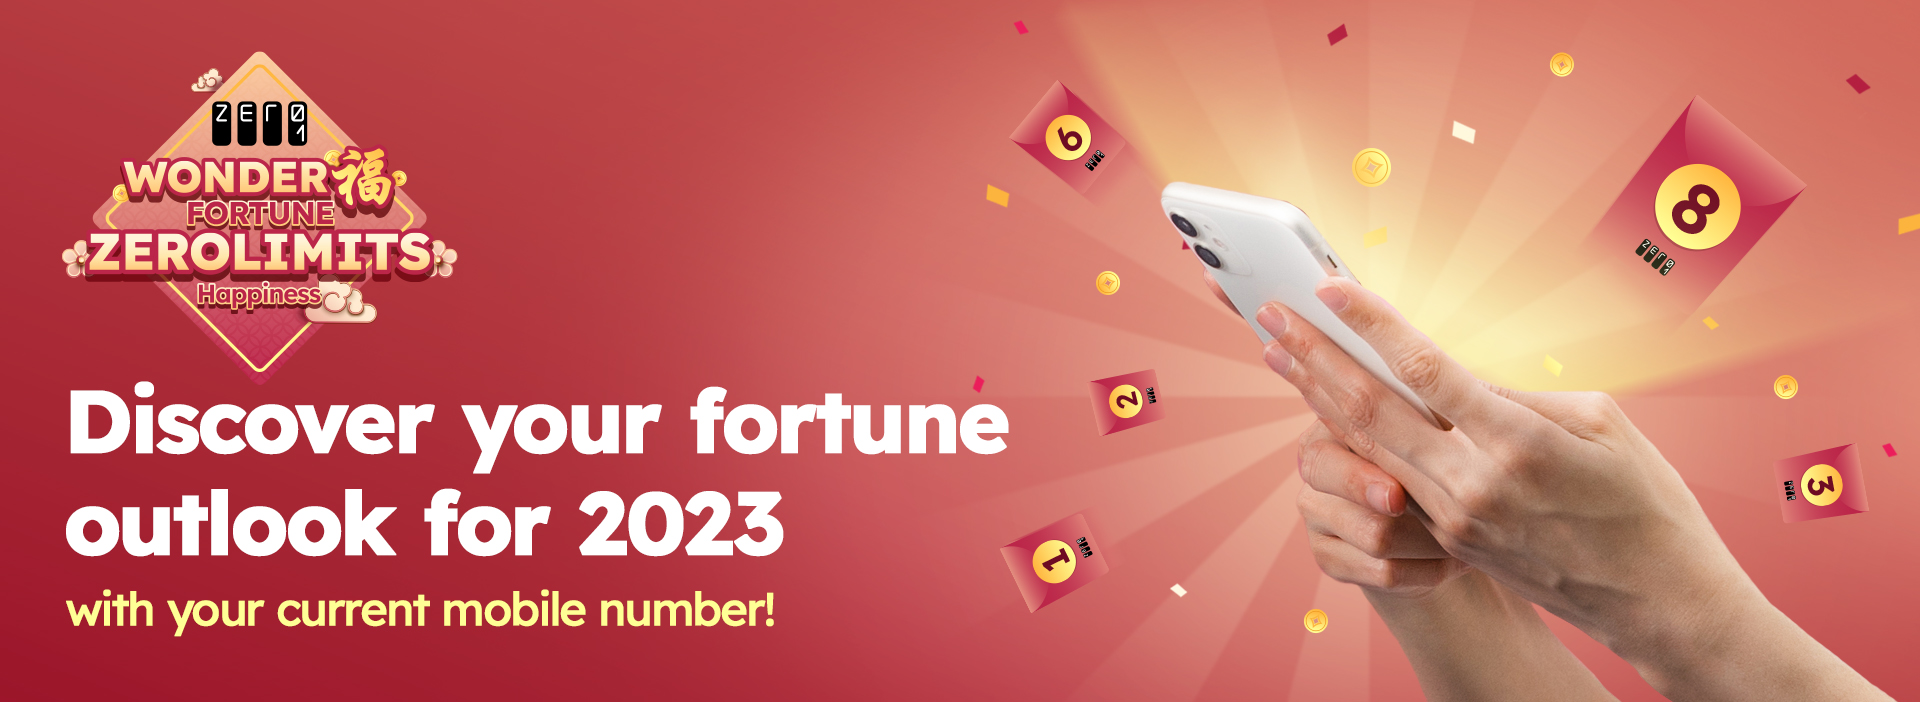 Banner WonderFU Fortune outlook mobile number 2023 Main Banner